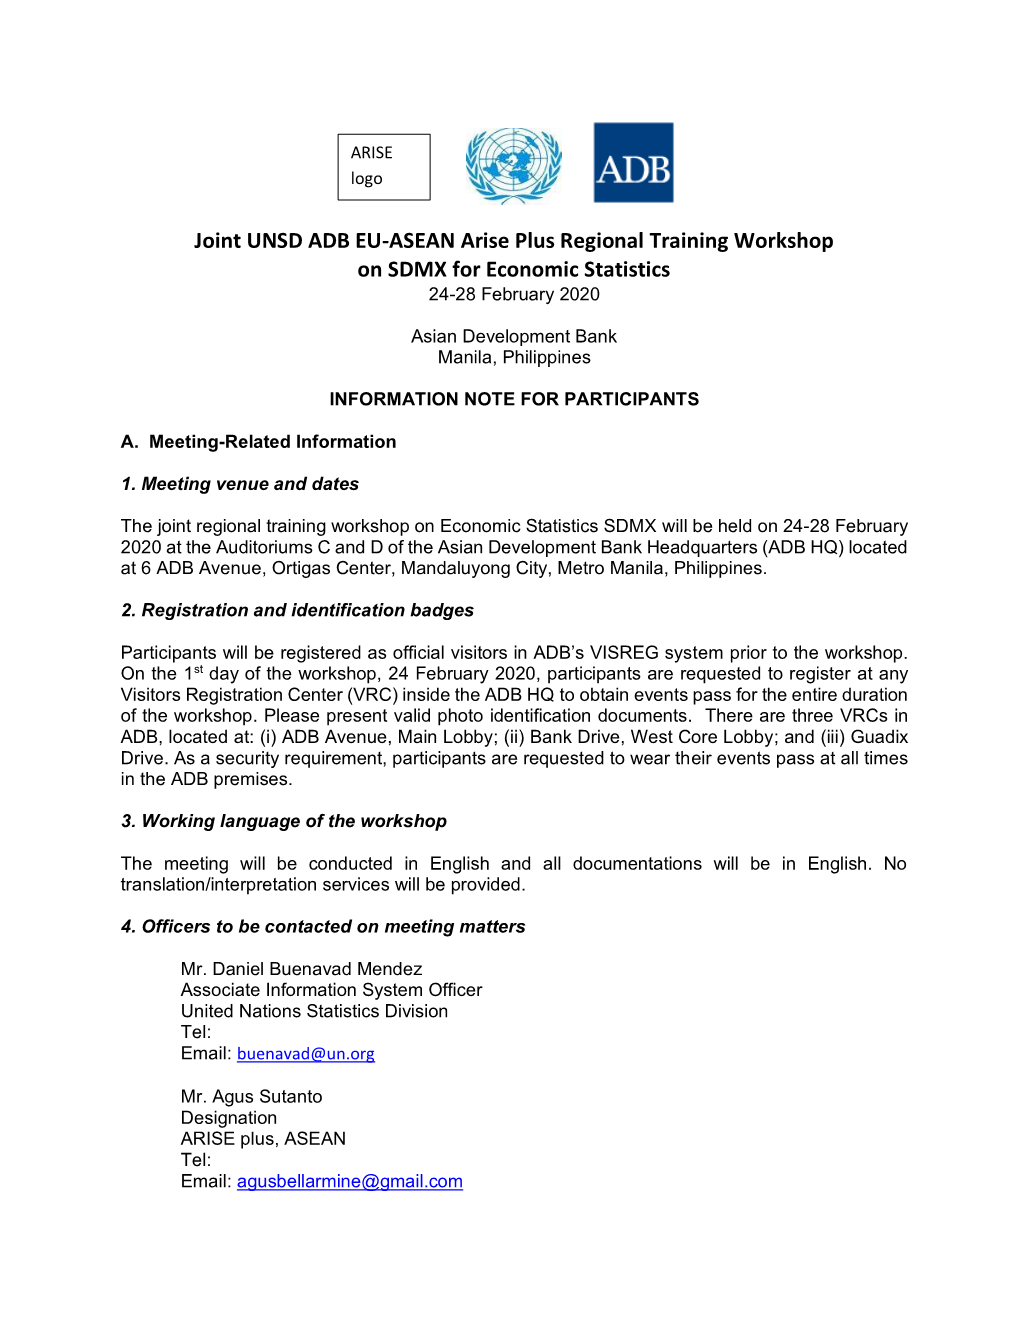 Joint UNSD ADB EU-ASEAN Arise Plus Regional Training Workshop on SDMX for Economic Statistics 24-28 February 2020